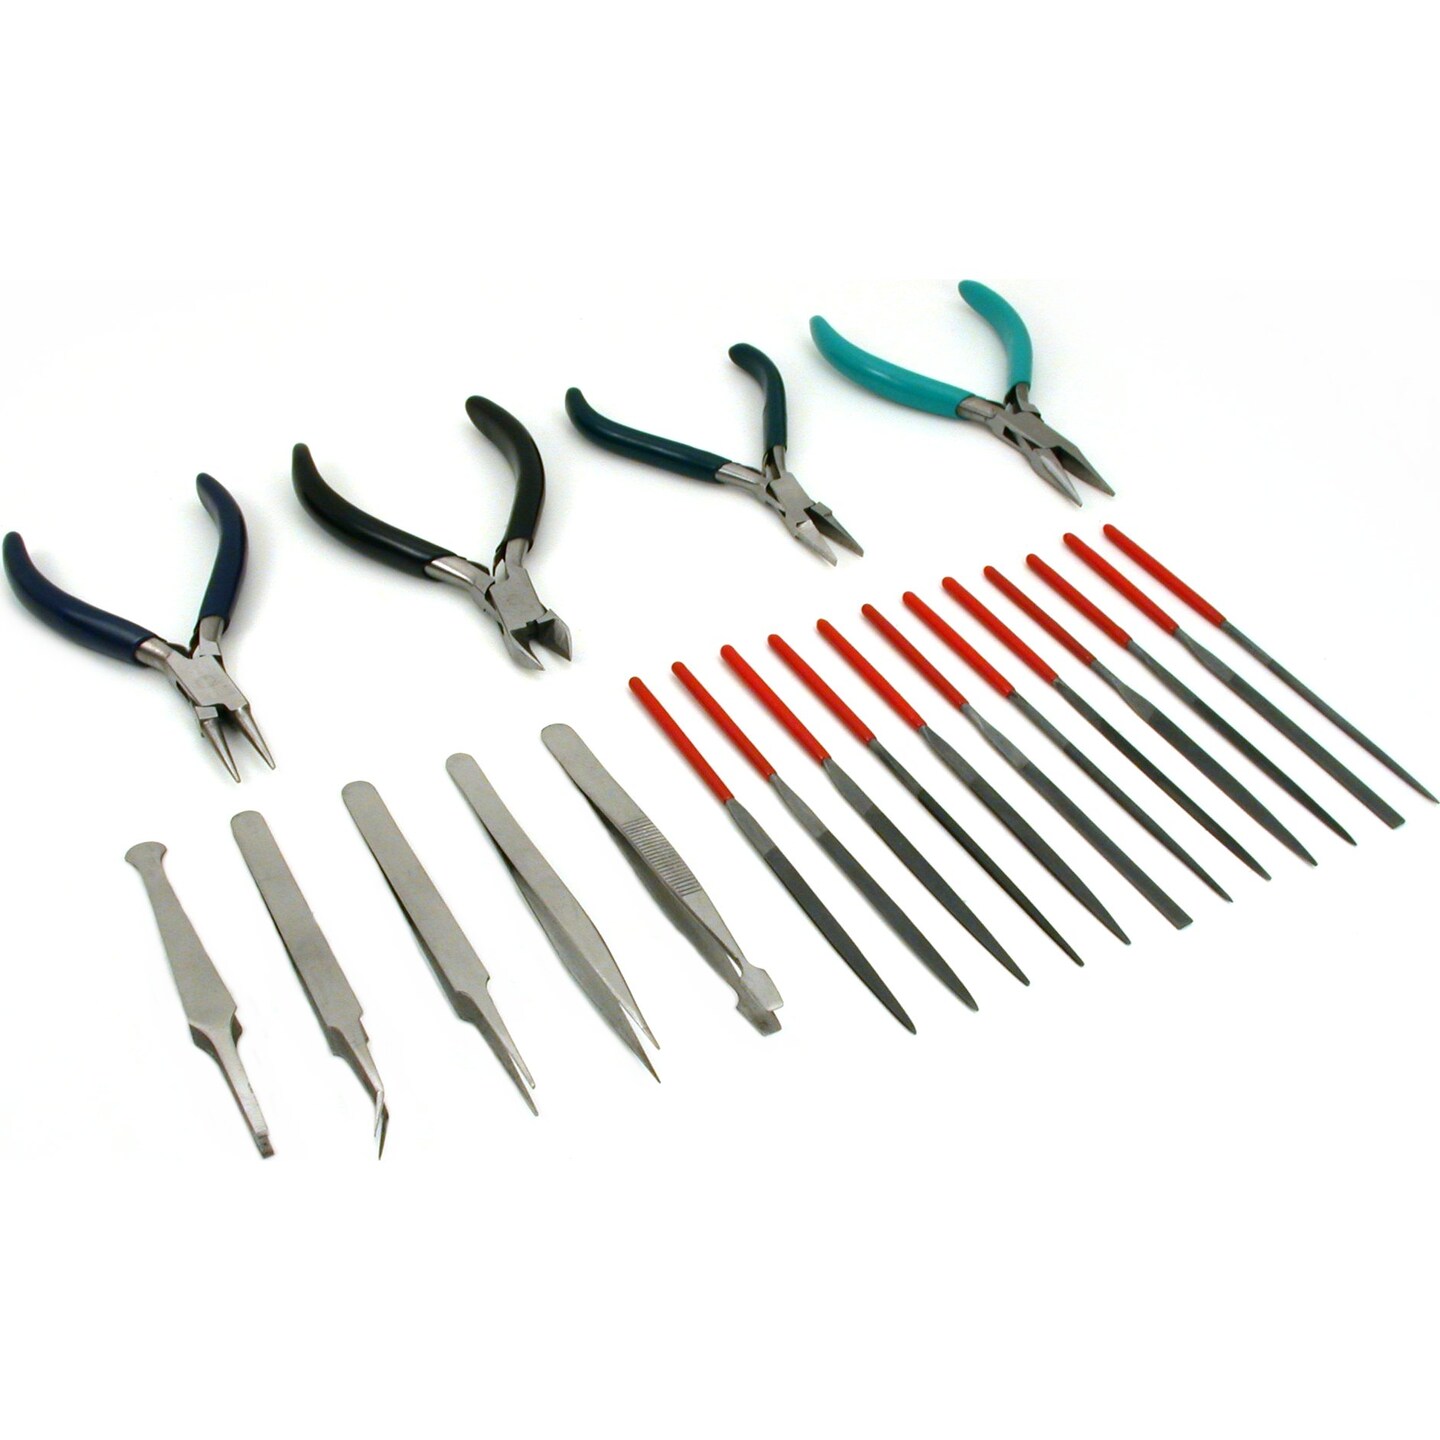 21 Jewelers Beading Needle Files Tweezers Pliers Tools